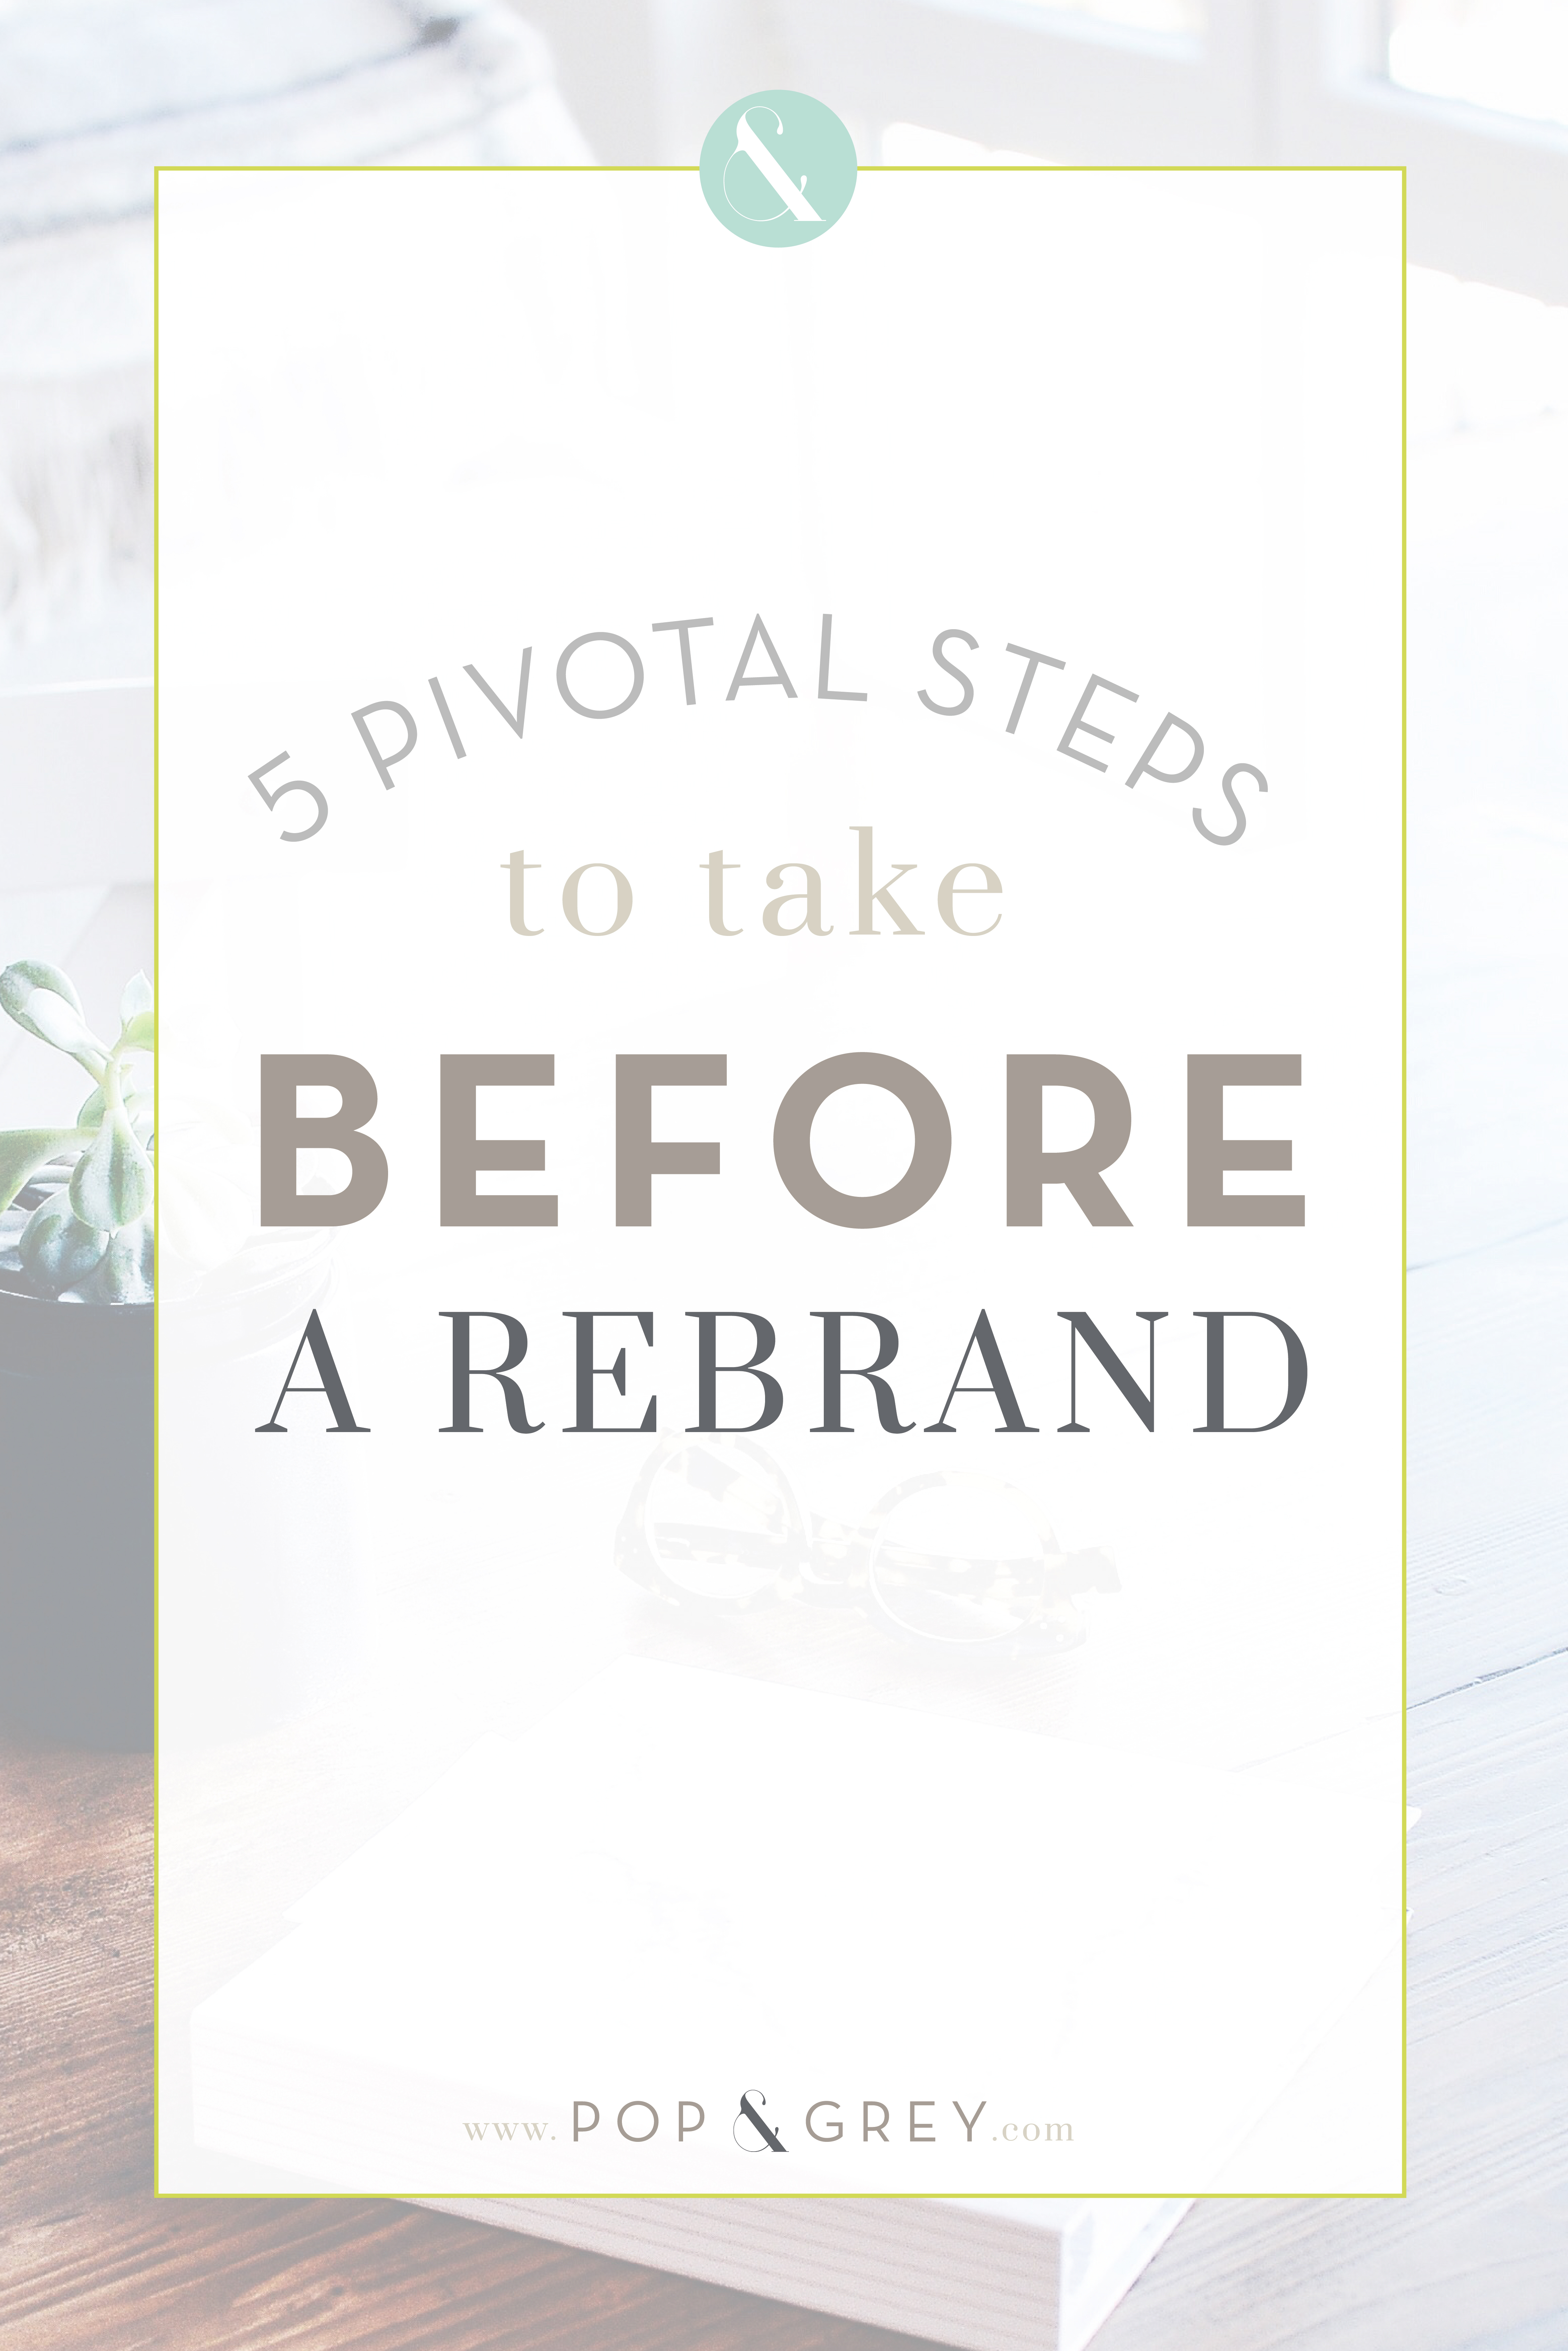 5 Pivotal Steps to take Before a Rebrand by Pop & Grey